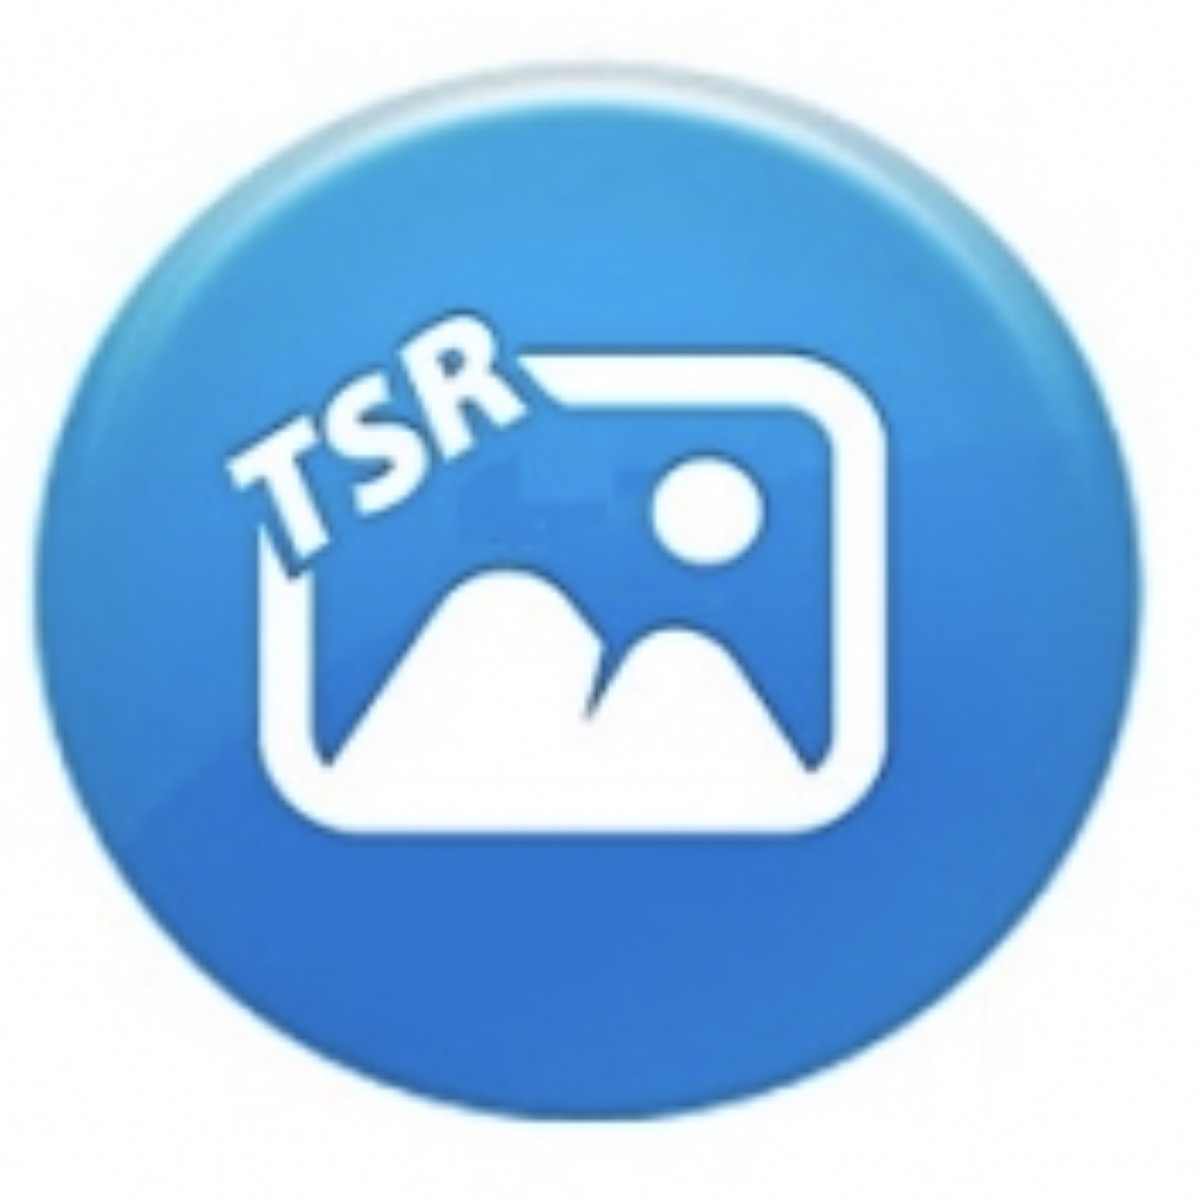 TSR Watermark Image Free